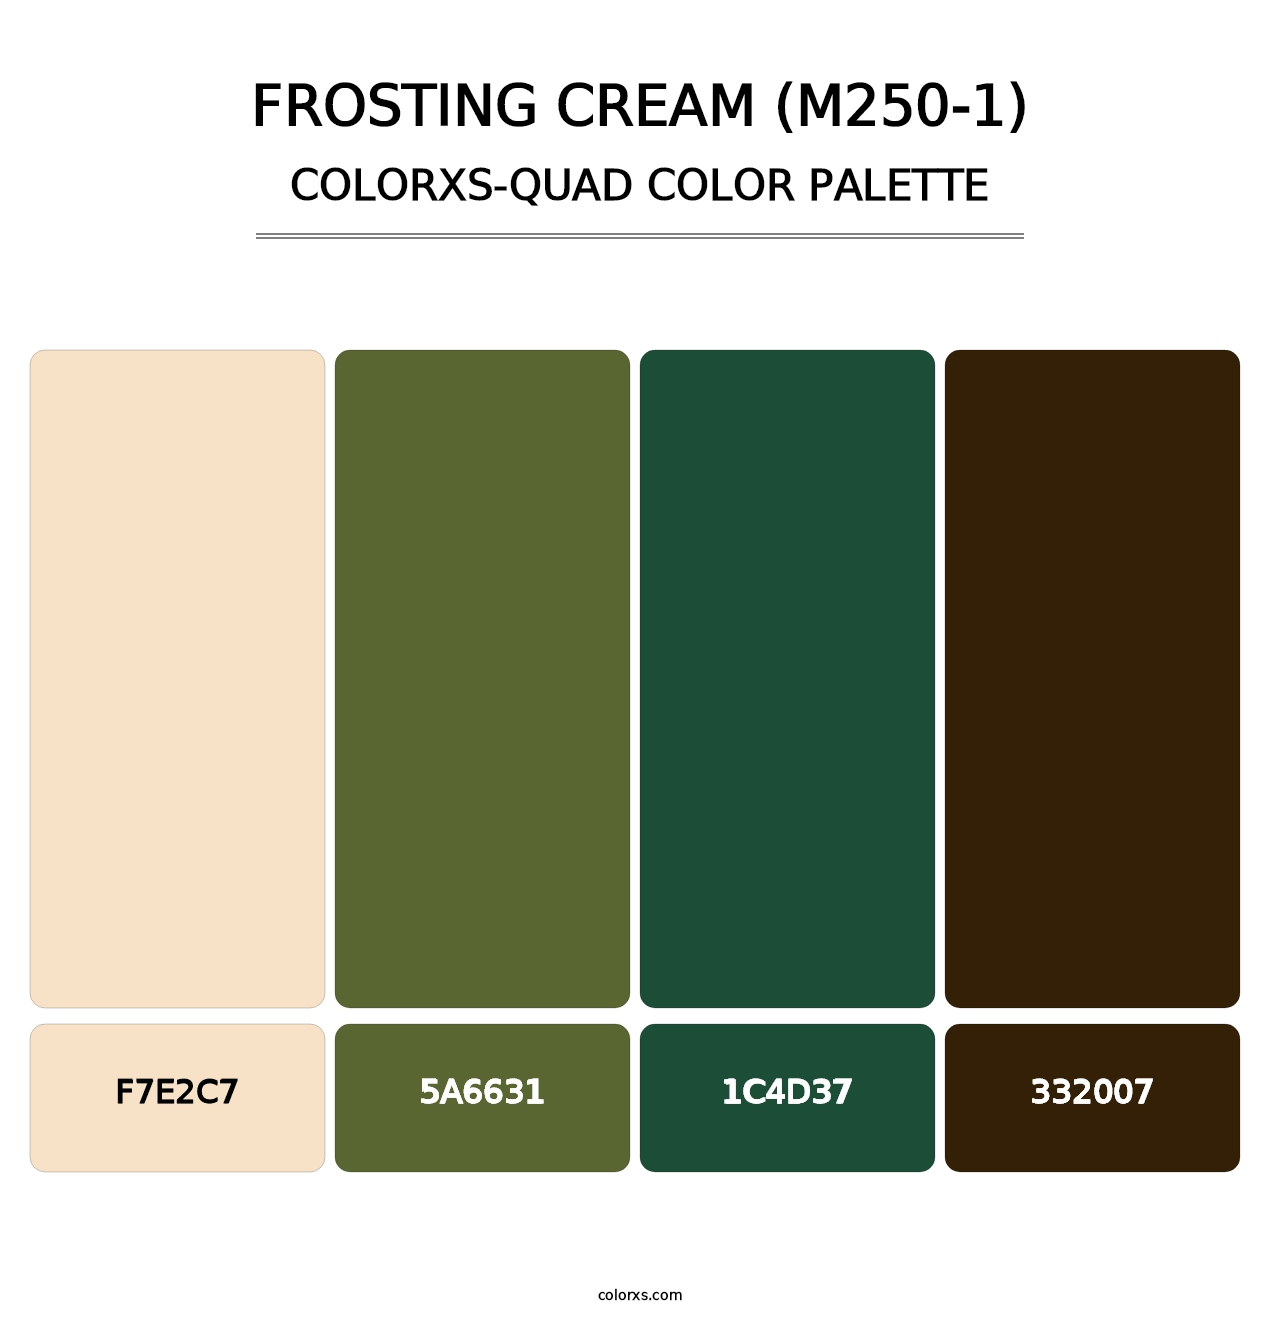 Frosting Cream (M250-1) - Colorxs Quad Palette